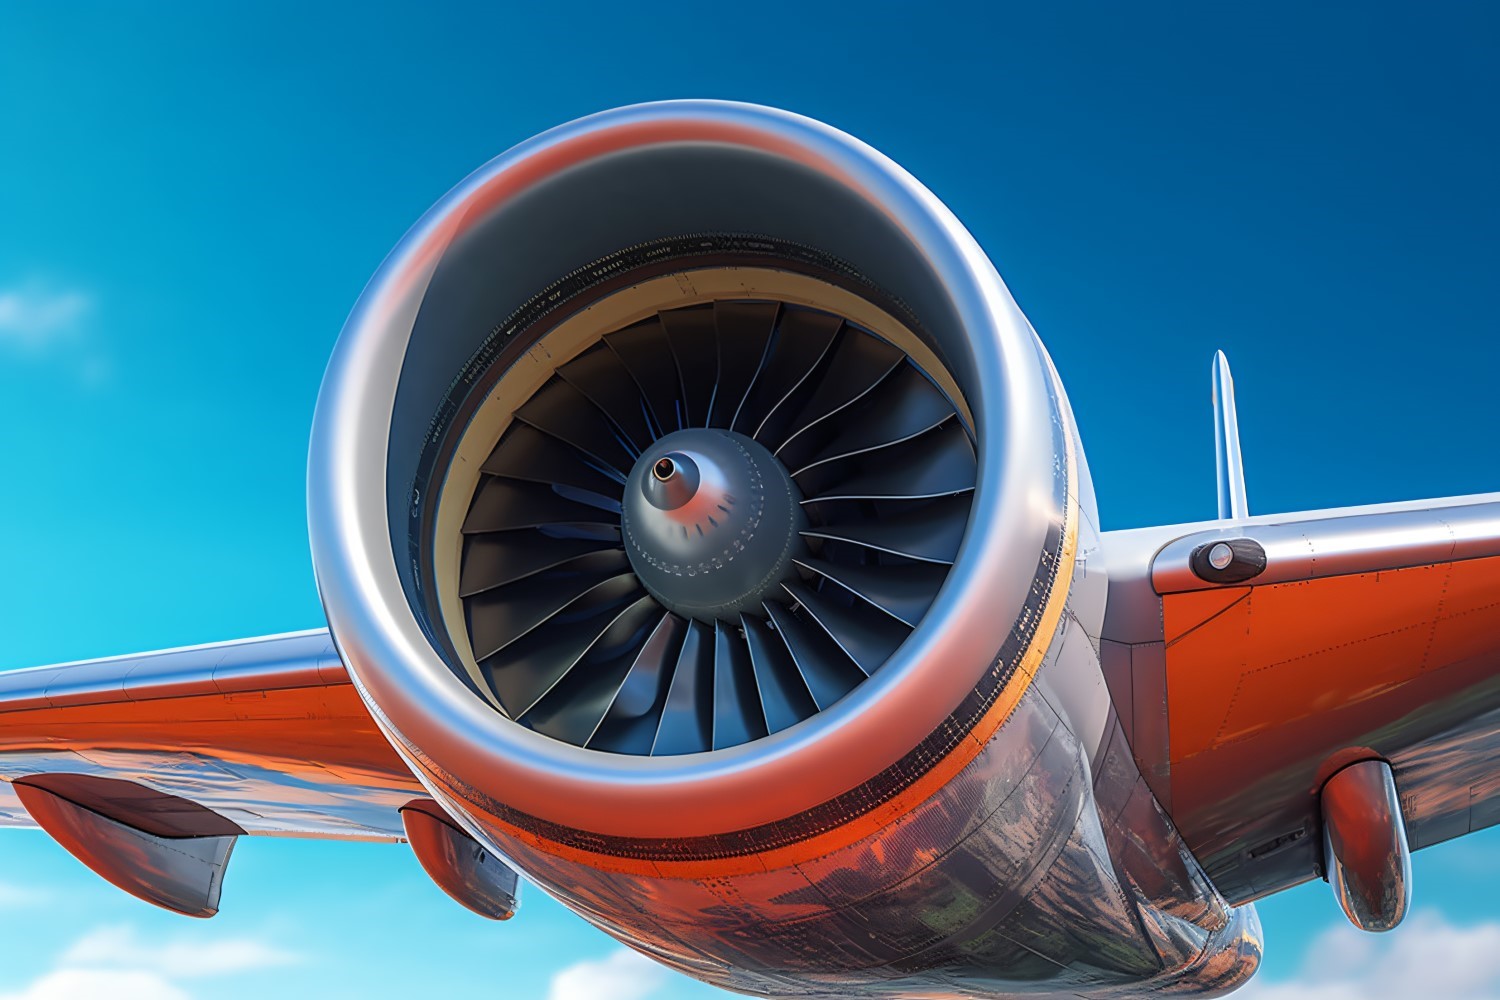 Airbus Engine Charter Flights 268